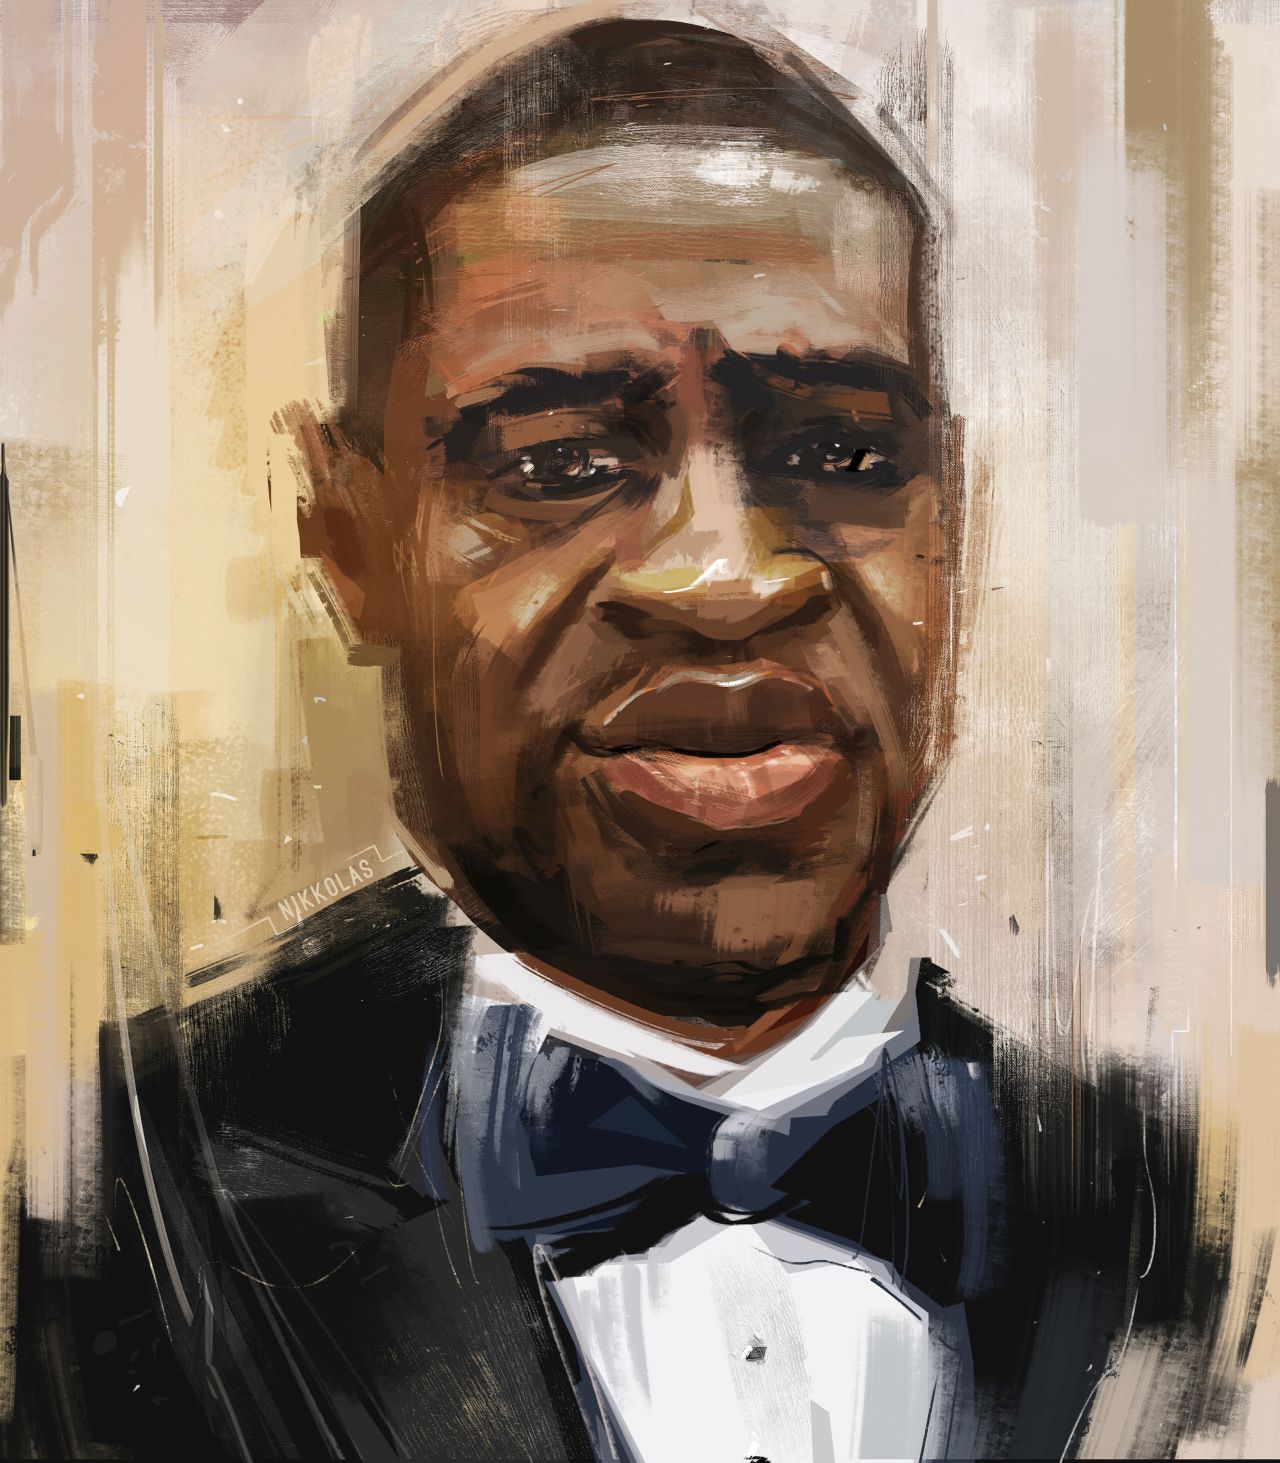 A portrait of George Floyd by Nikkolas Smith